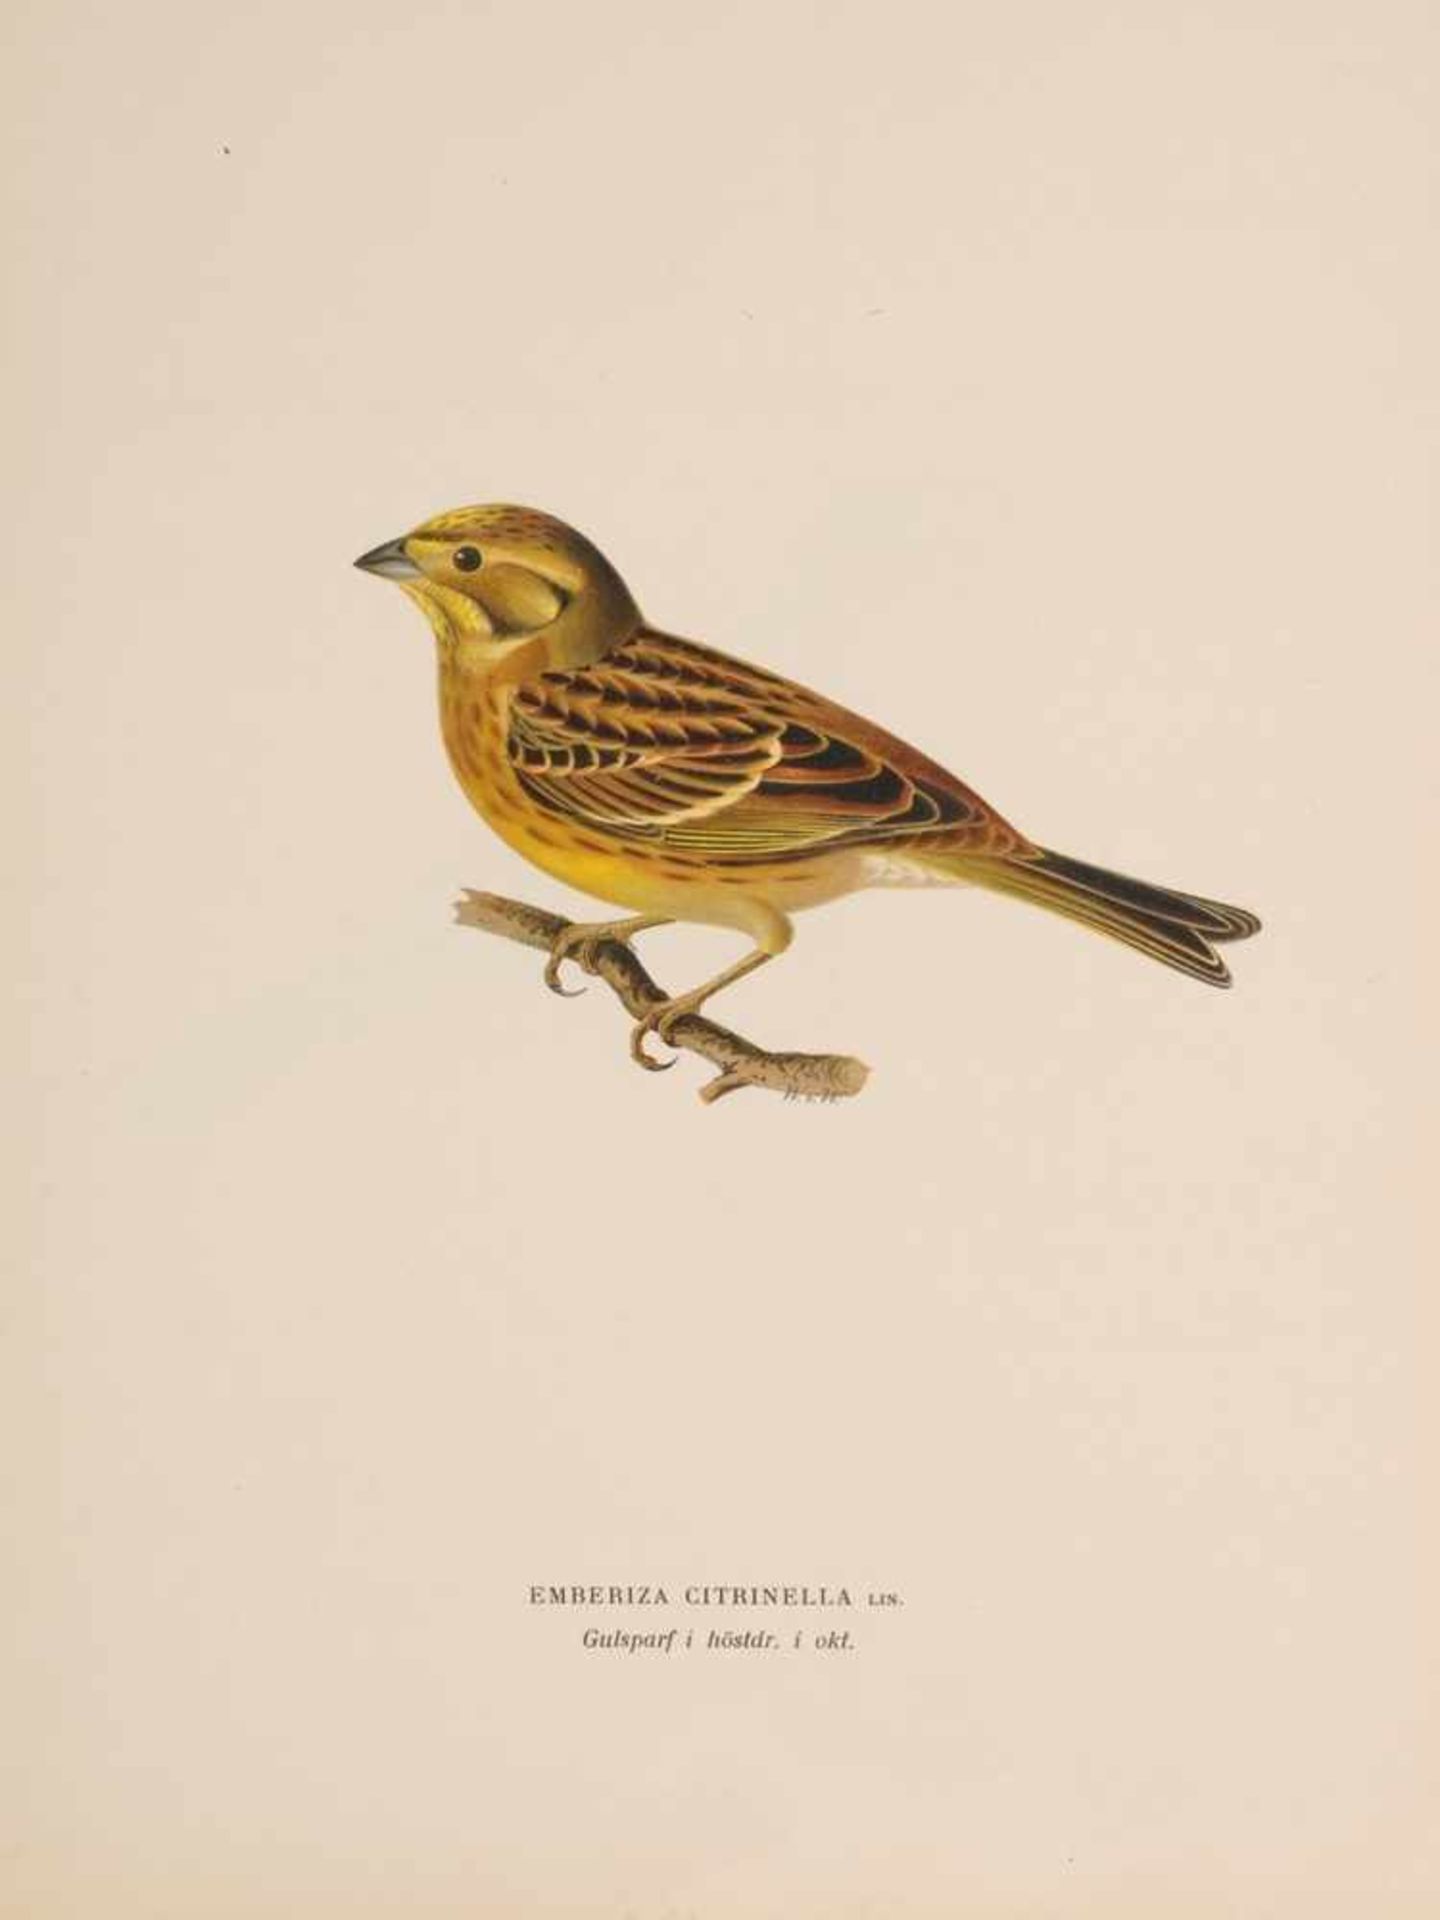 Fünf ornithologische Illustrationen SingvögelChromolithographie. "Emberiza Citrinella" (